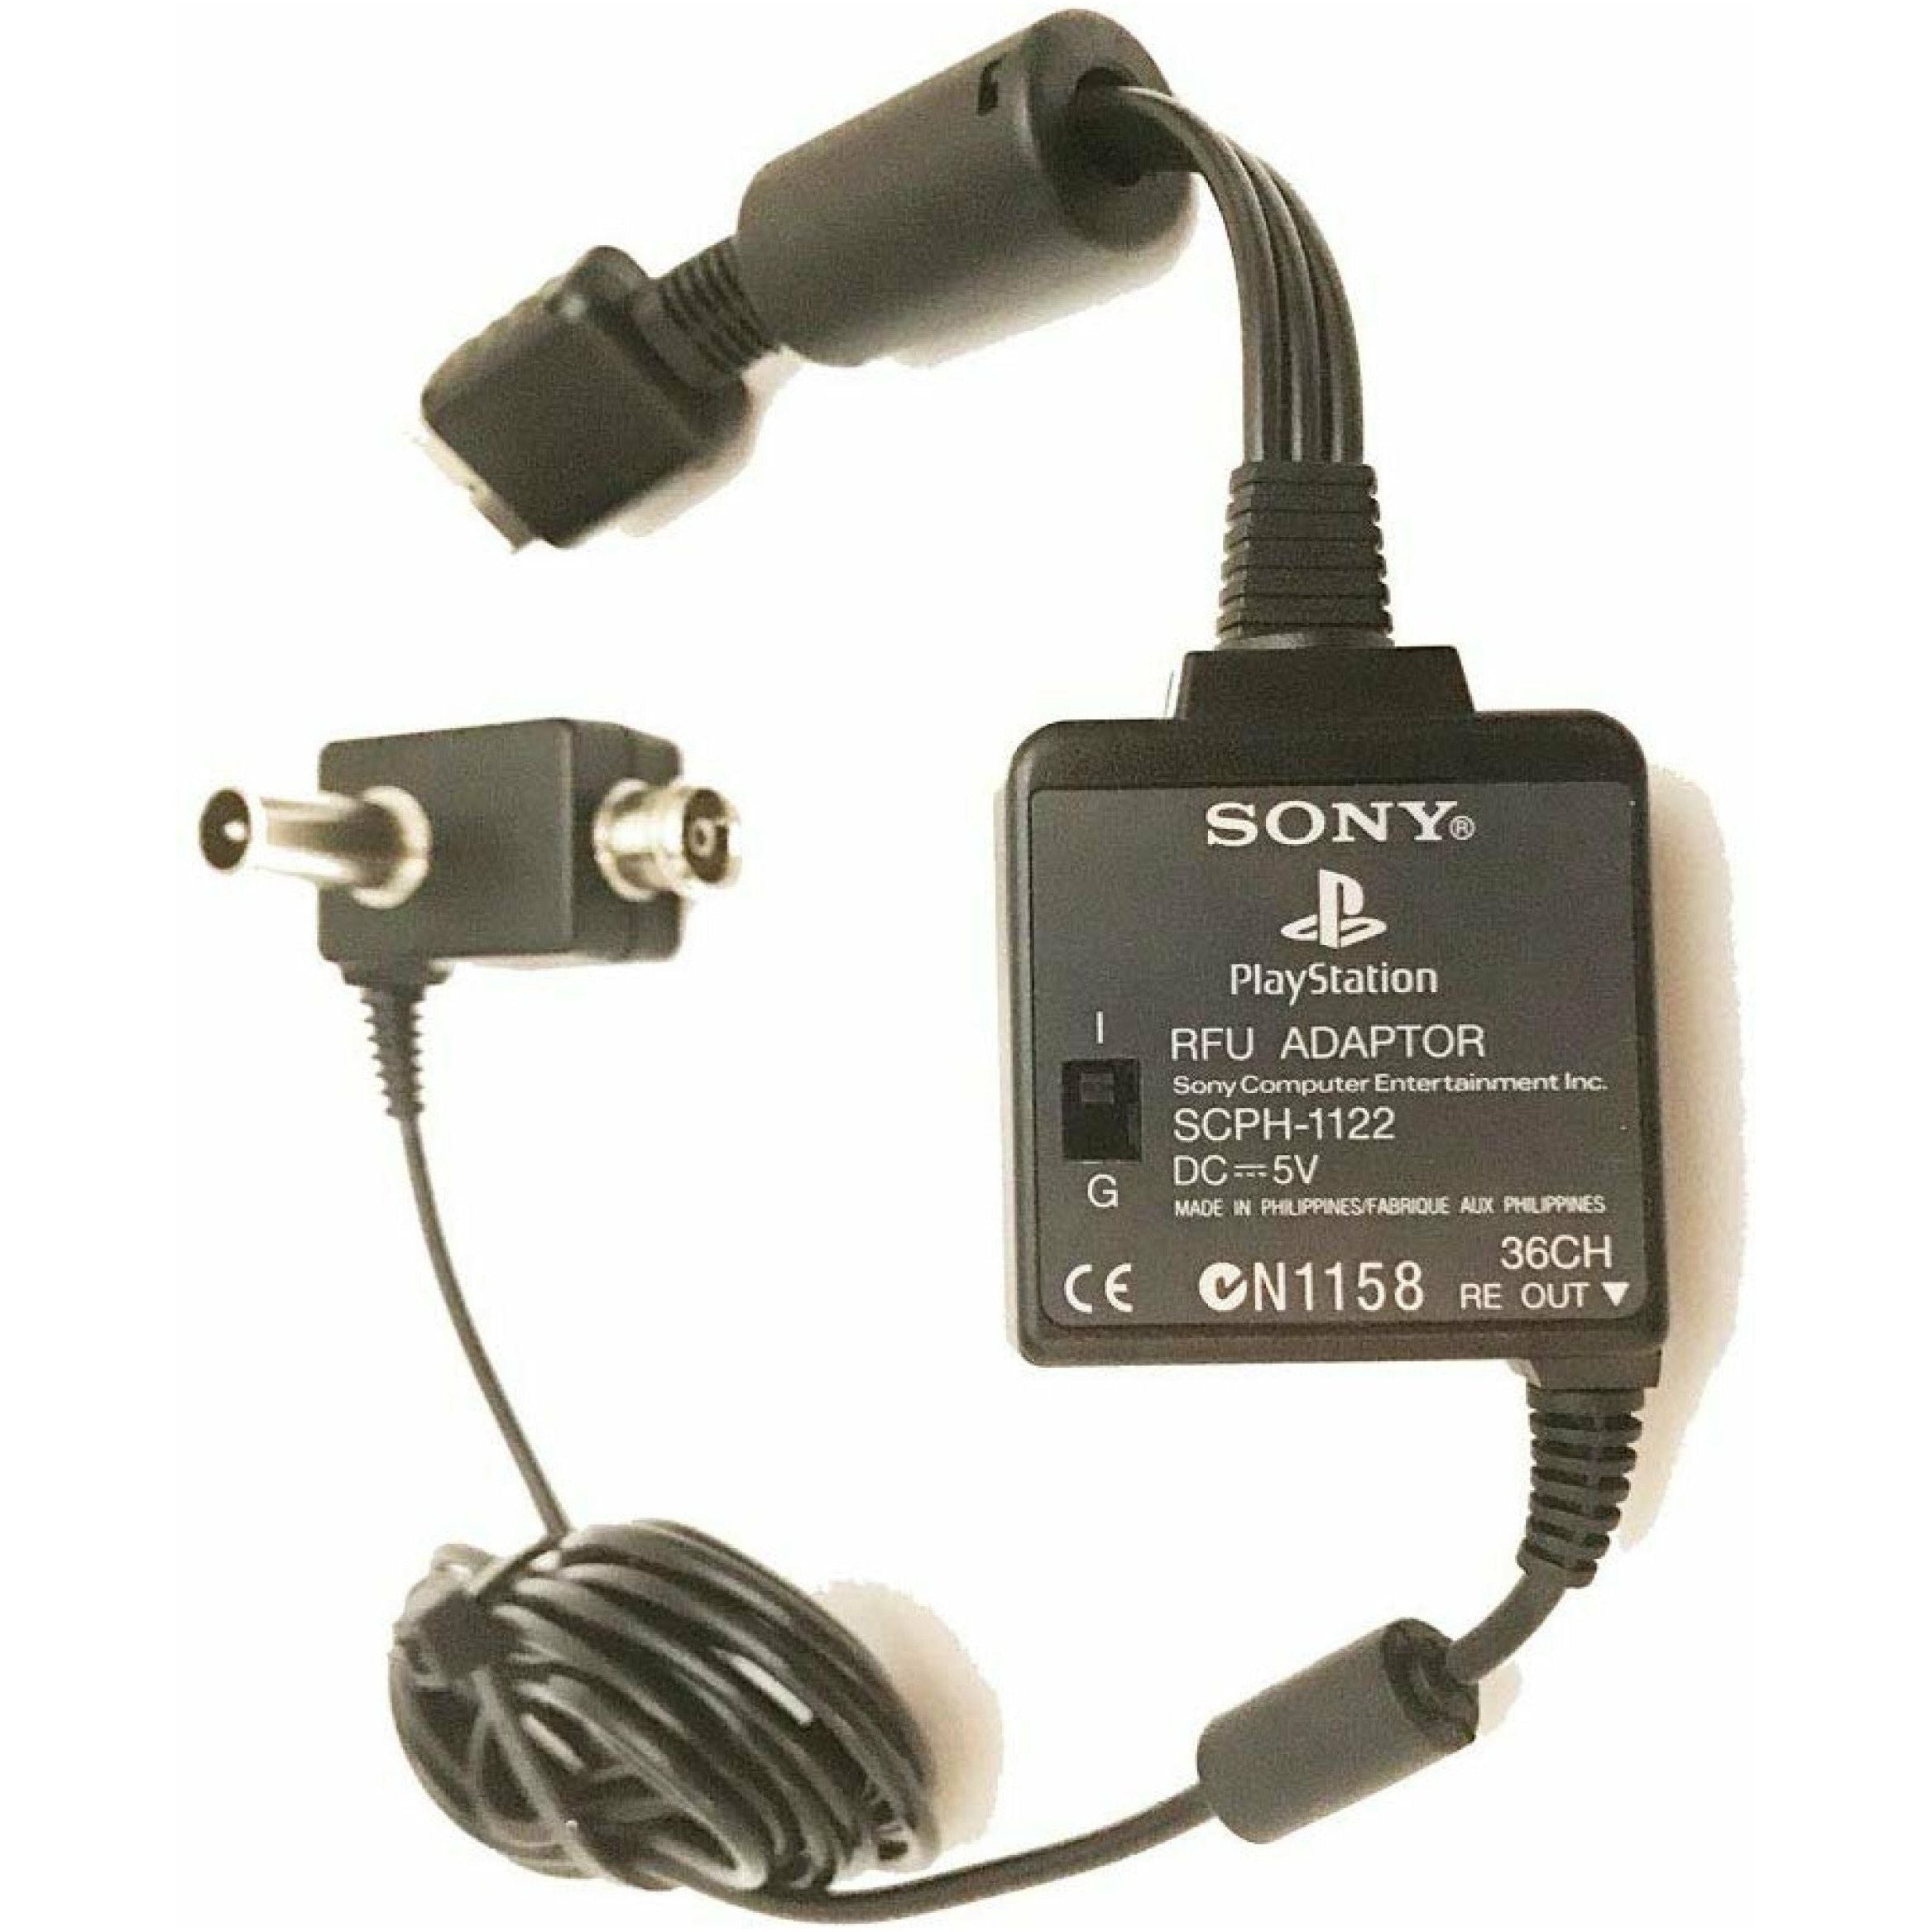 Playstation RFU Adaptor